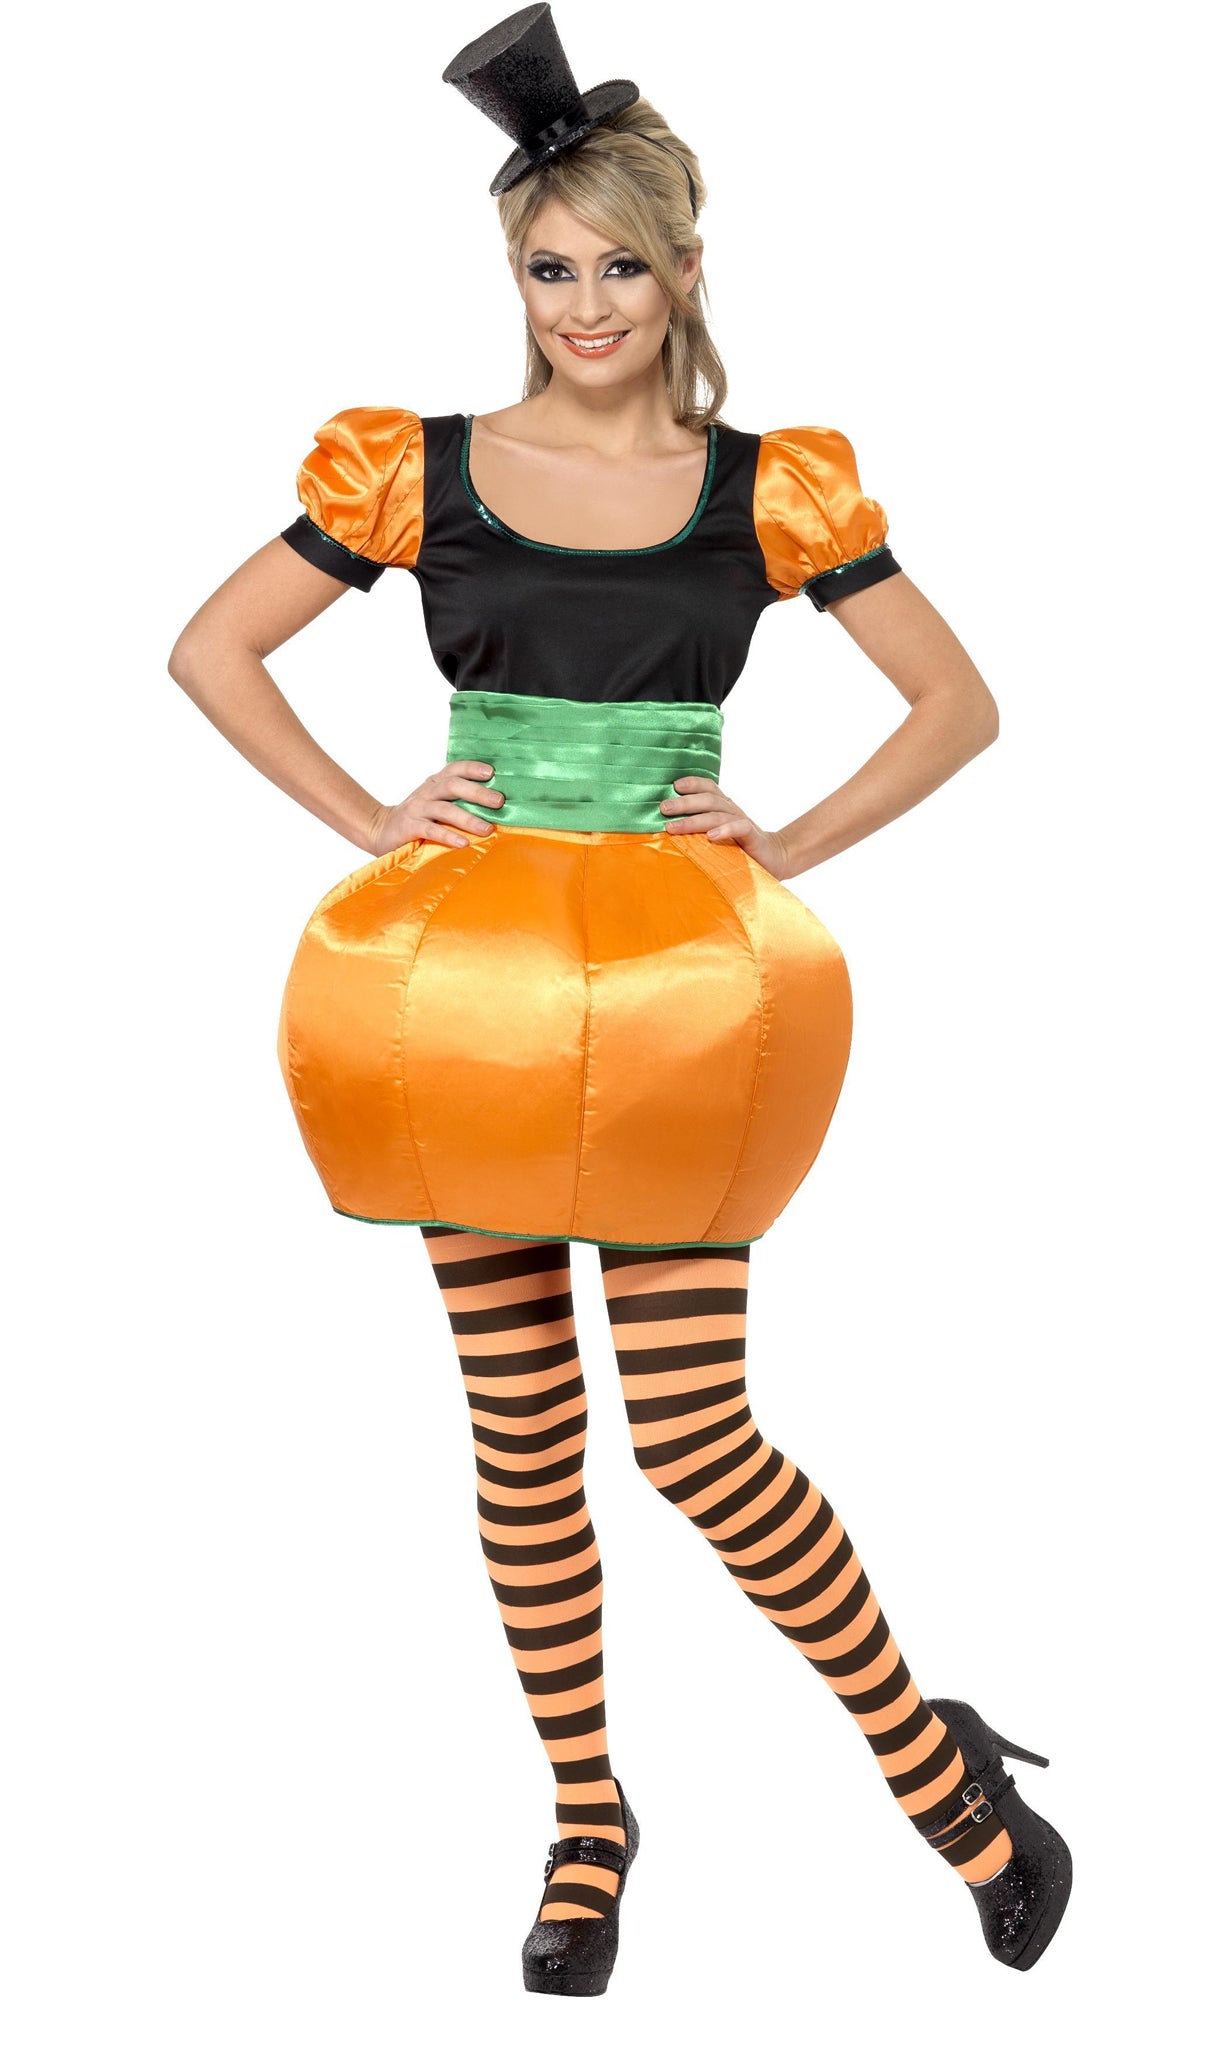 Orange pumpkin skirt and top with green cummerbund